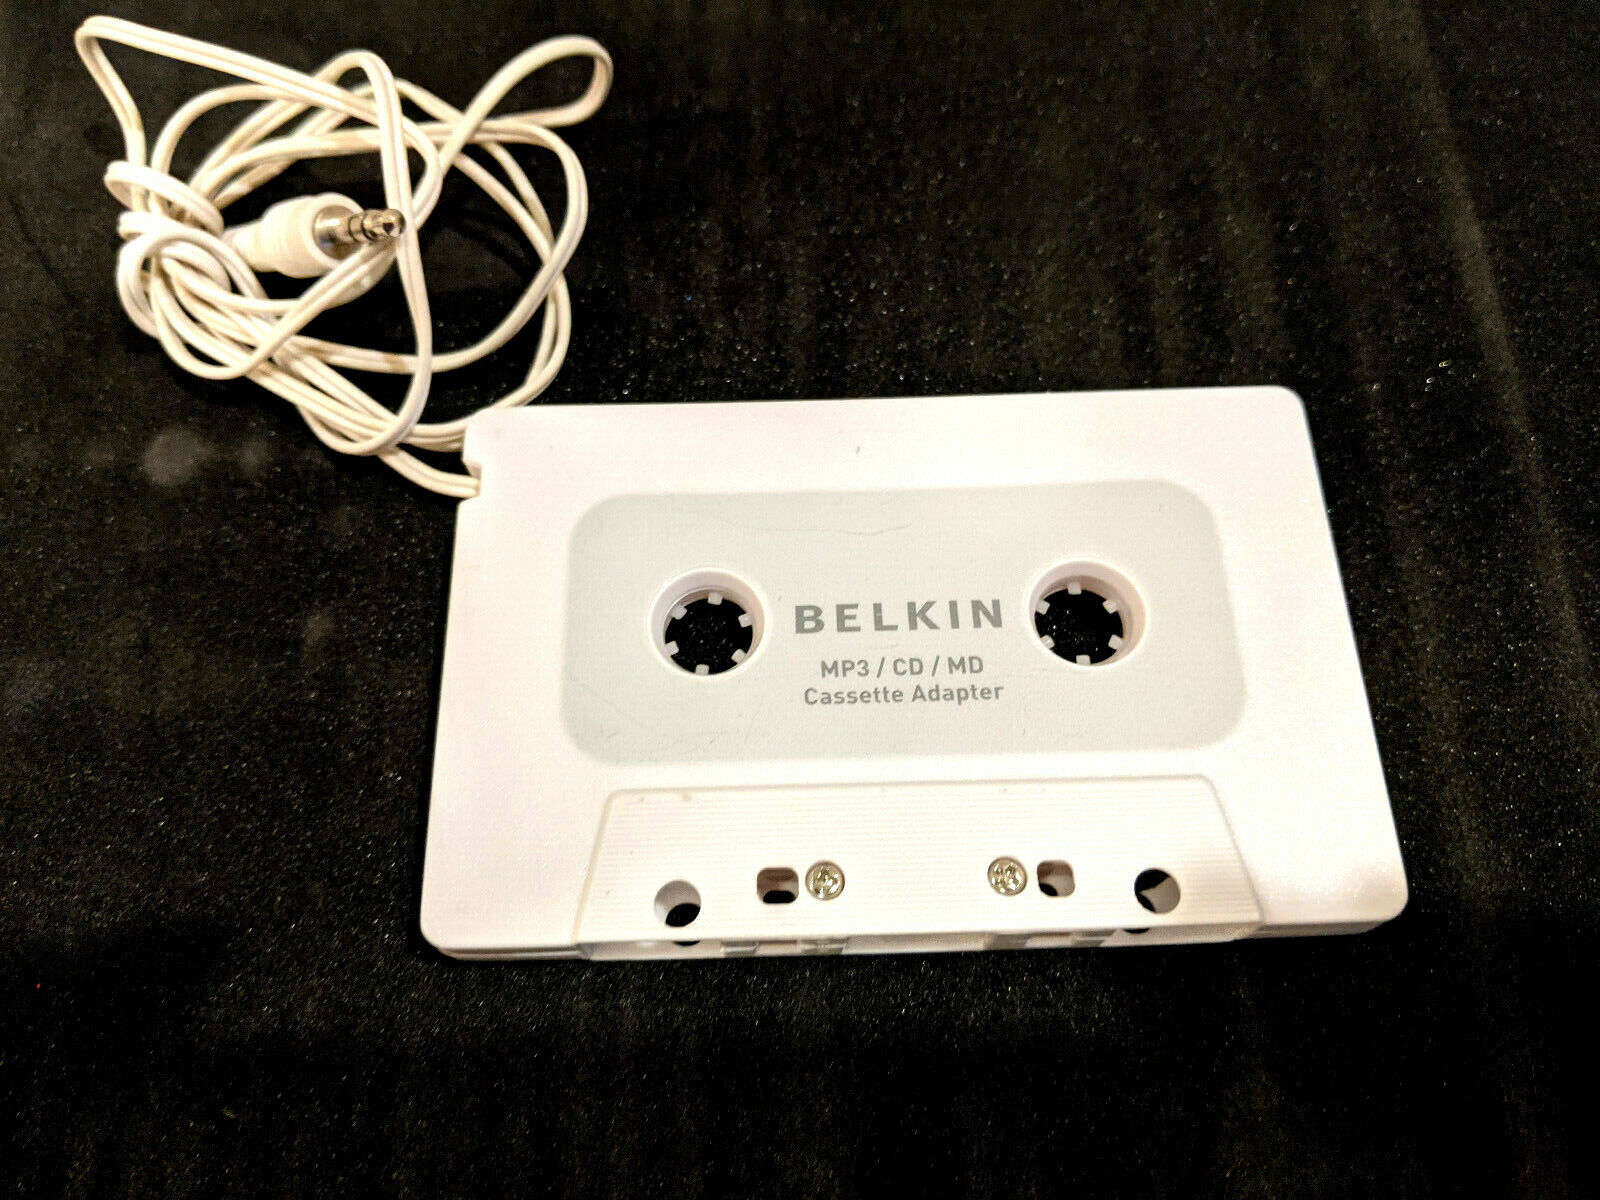 Belkin Mobile Cassette Adapter For Mp3/cd/md Players #f8v366-apl (used)